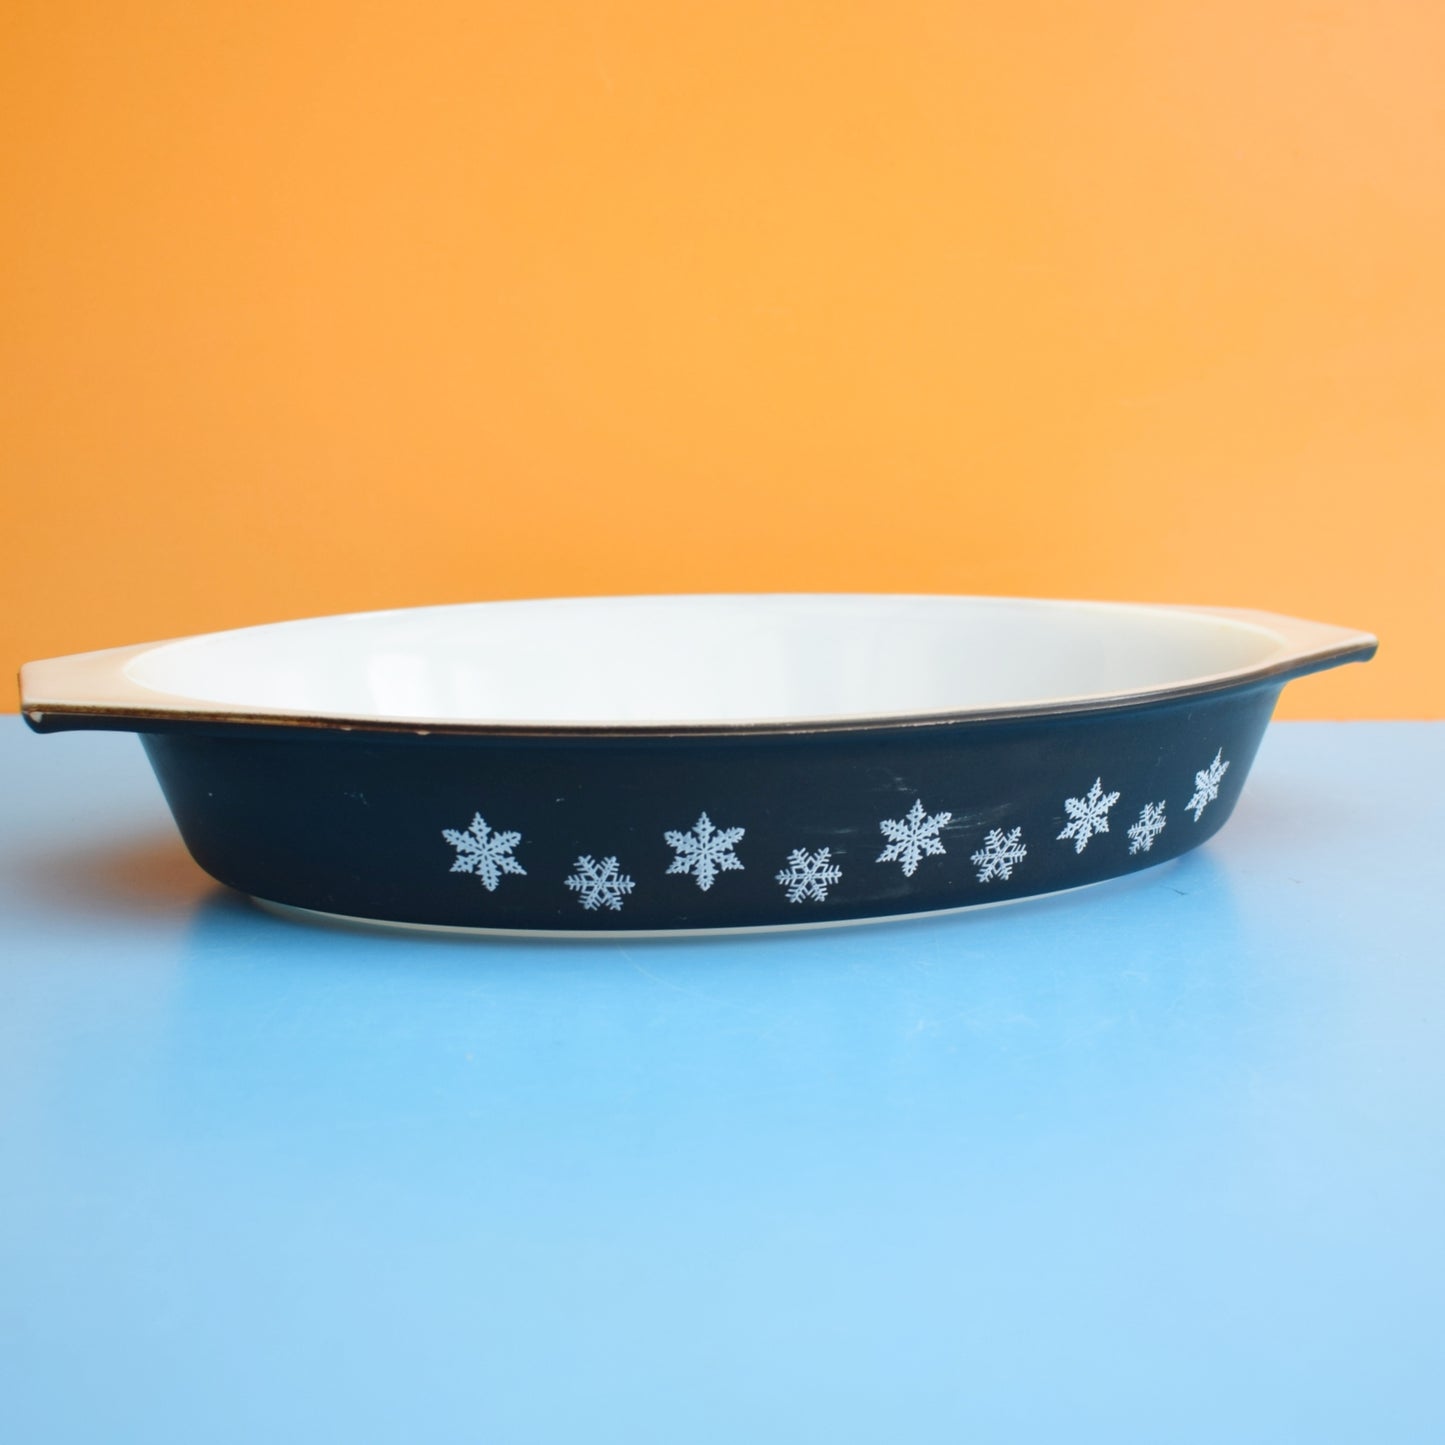 Vintage 1950s Pyrex Oval Dish - Snowflake Black